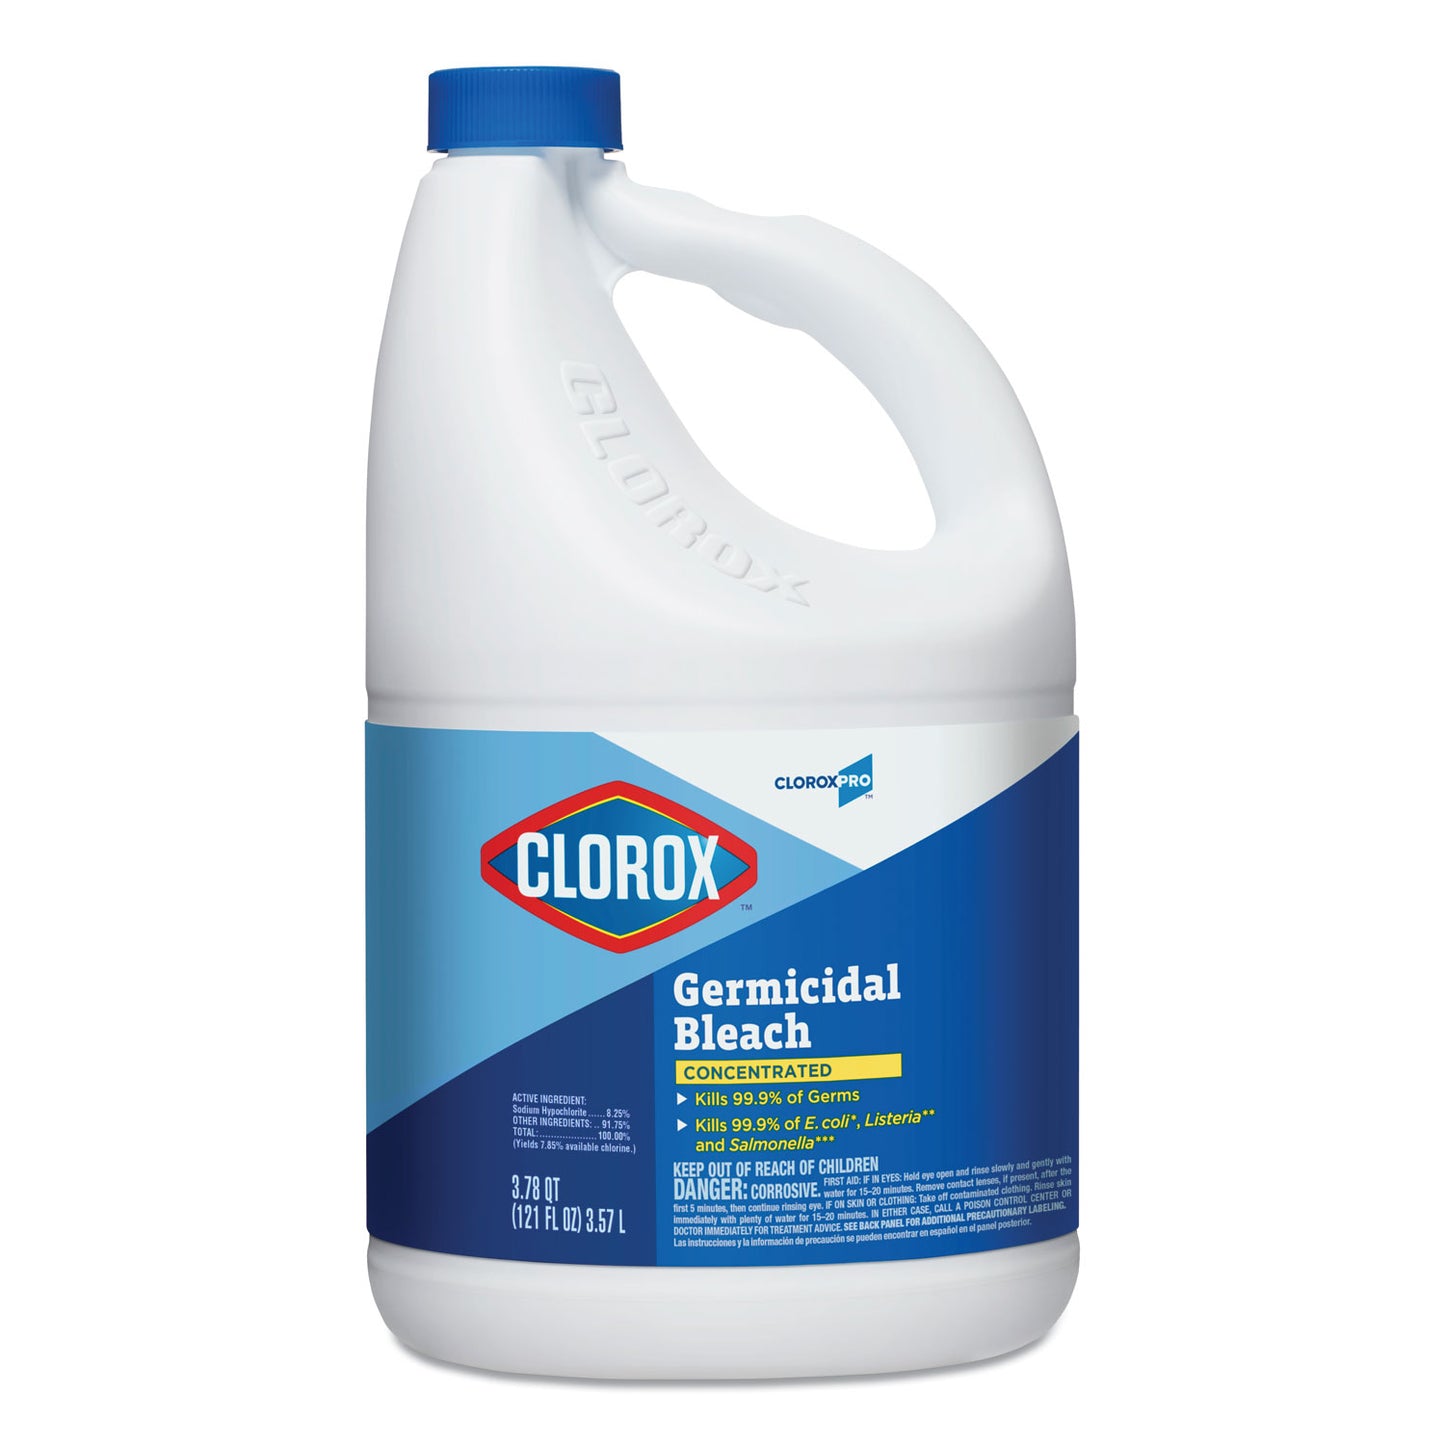 Clorox Concentrated Germicidal Bleach